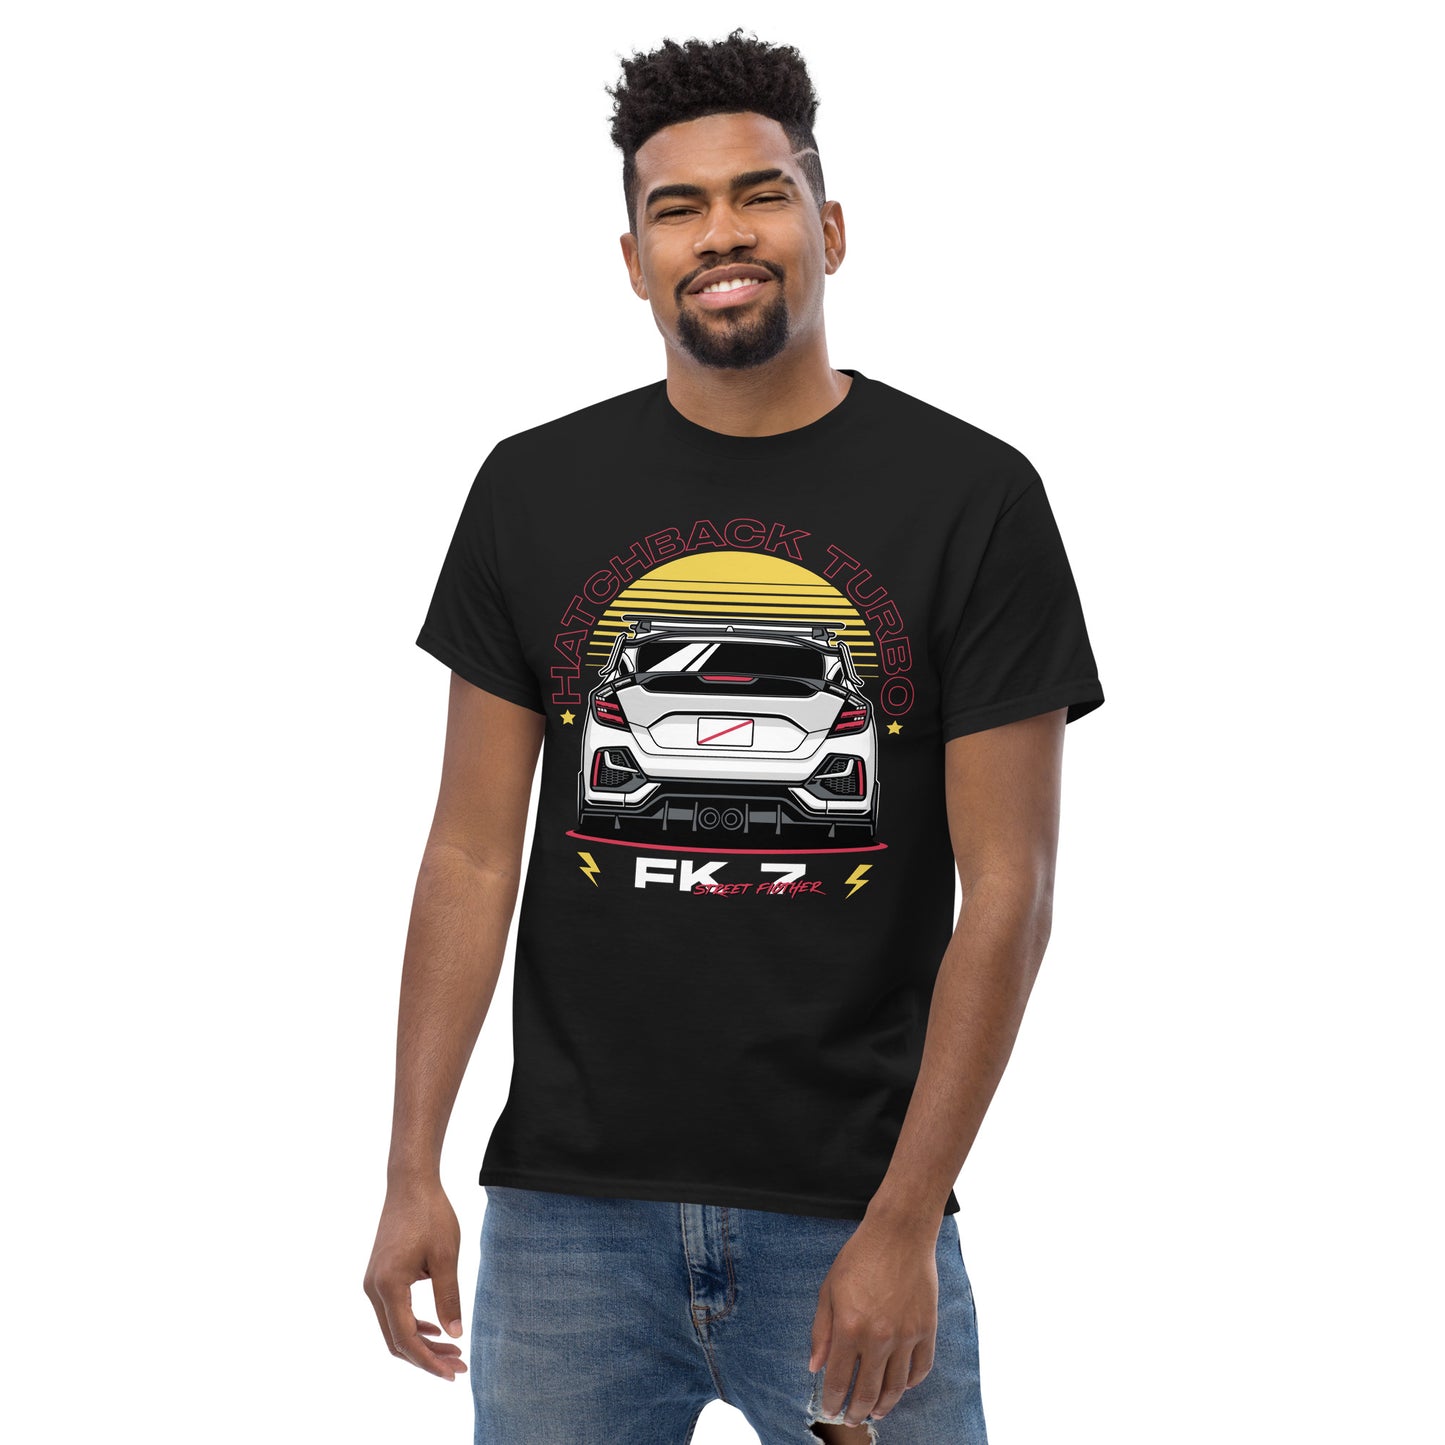 FK7 FK8 hatchback import JDM classic tee t-shirt